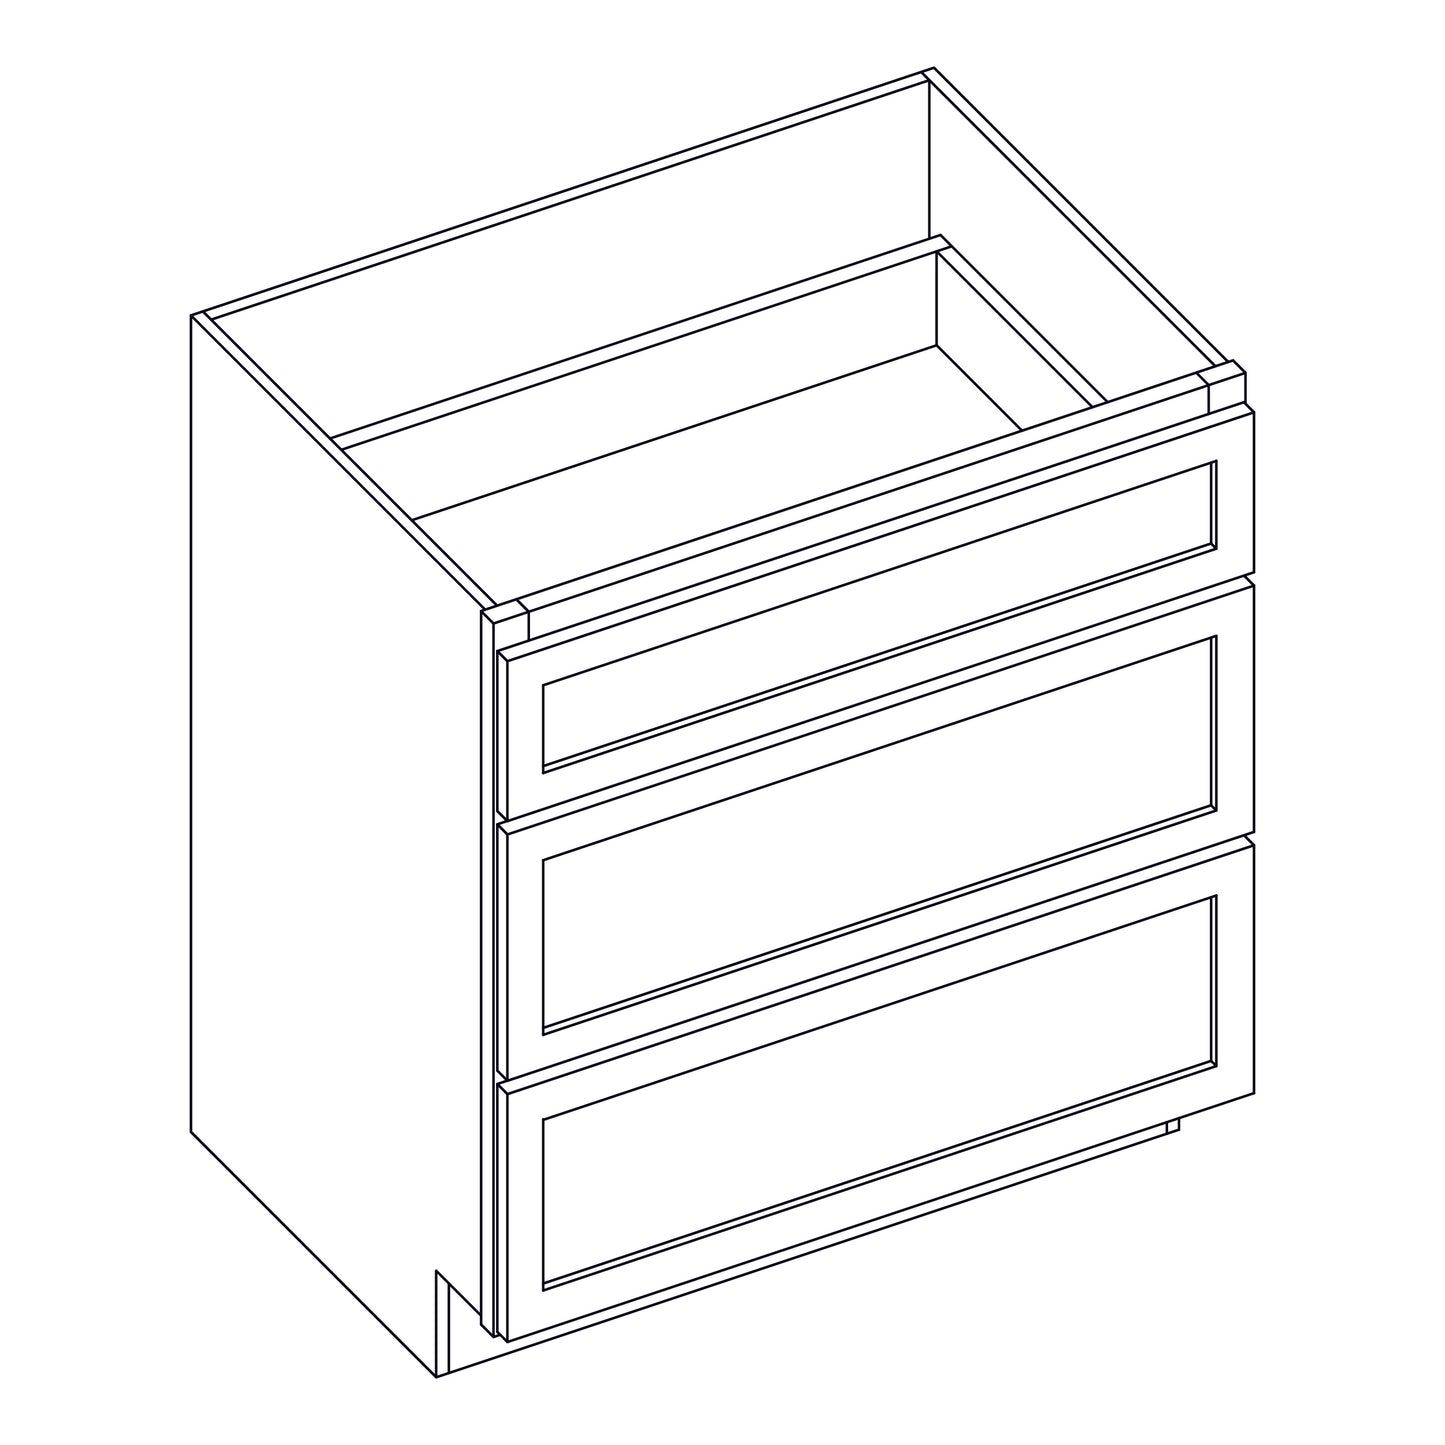 Drawer Base Cabinet - 15 inch - DB15-3